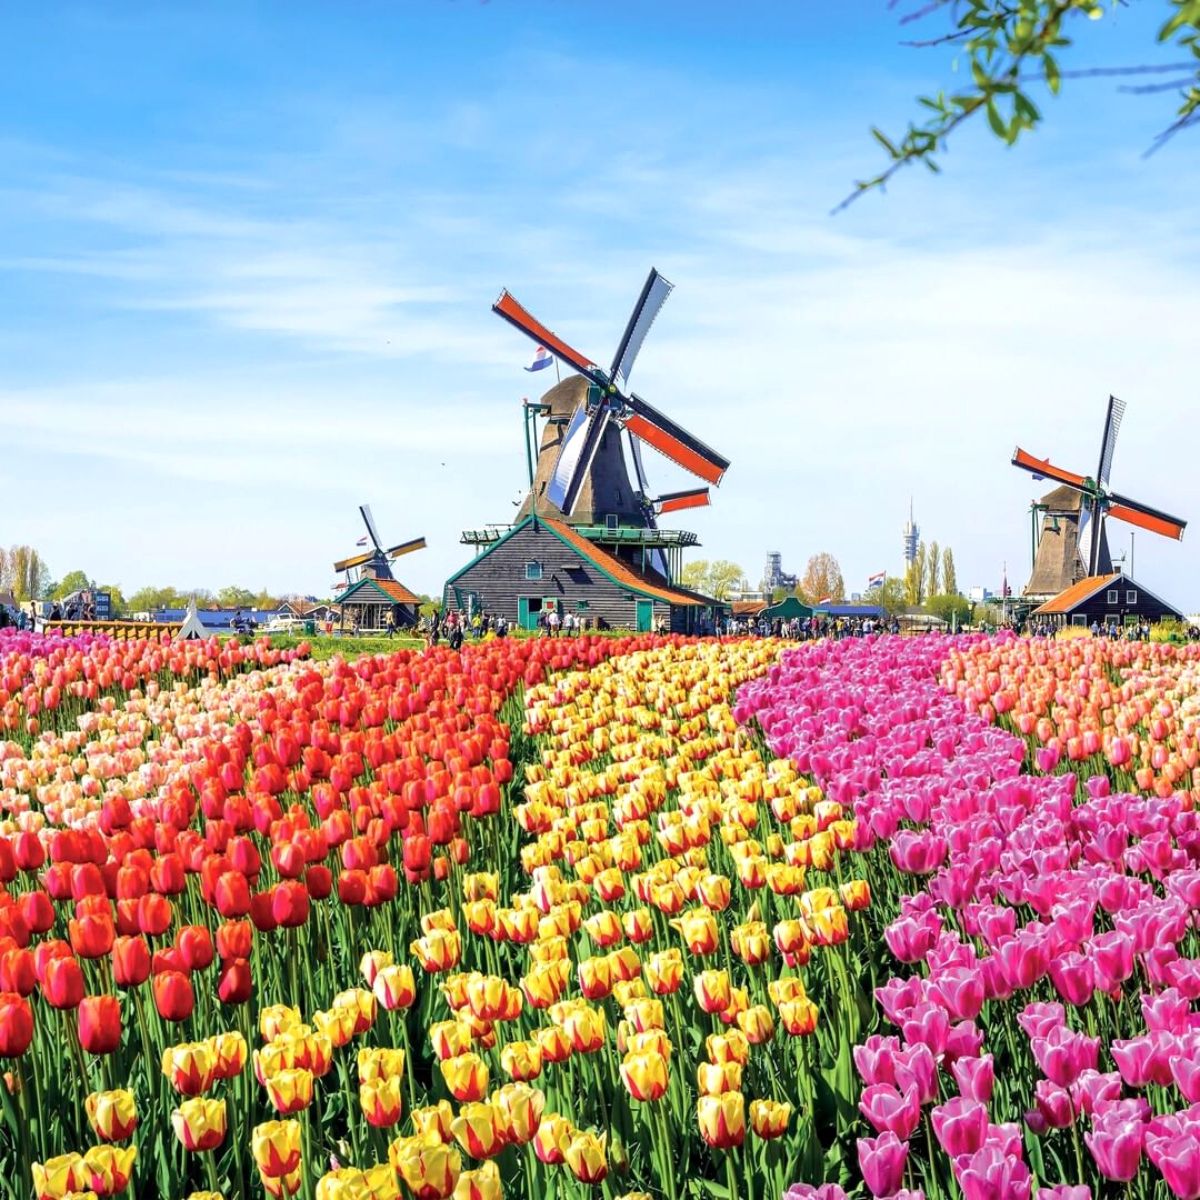 Dutch tulip season is starting now